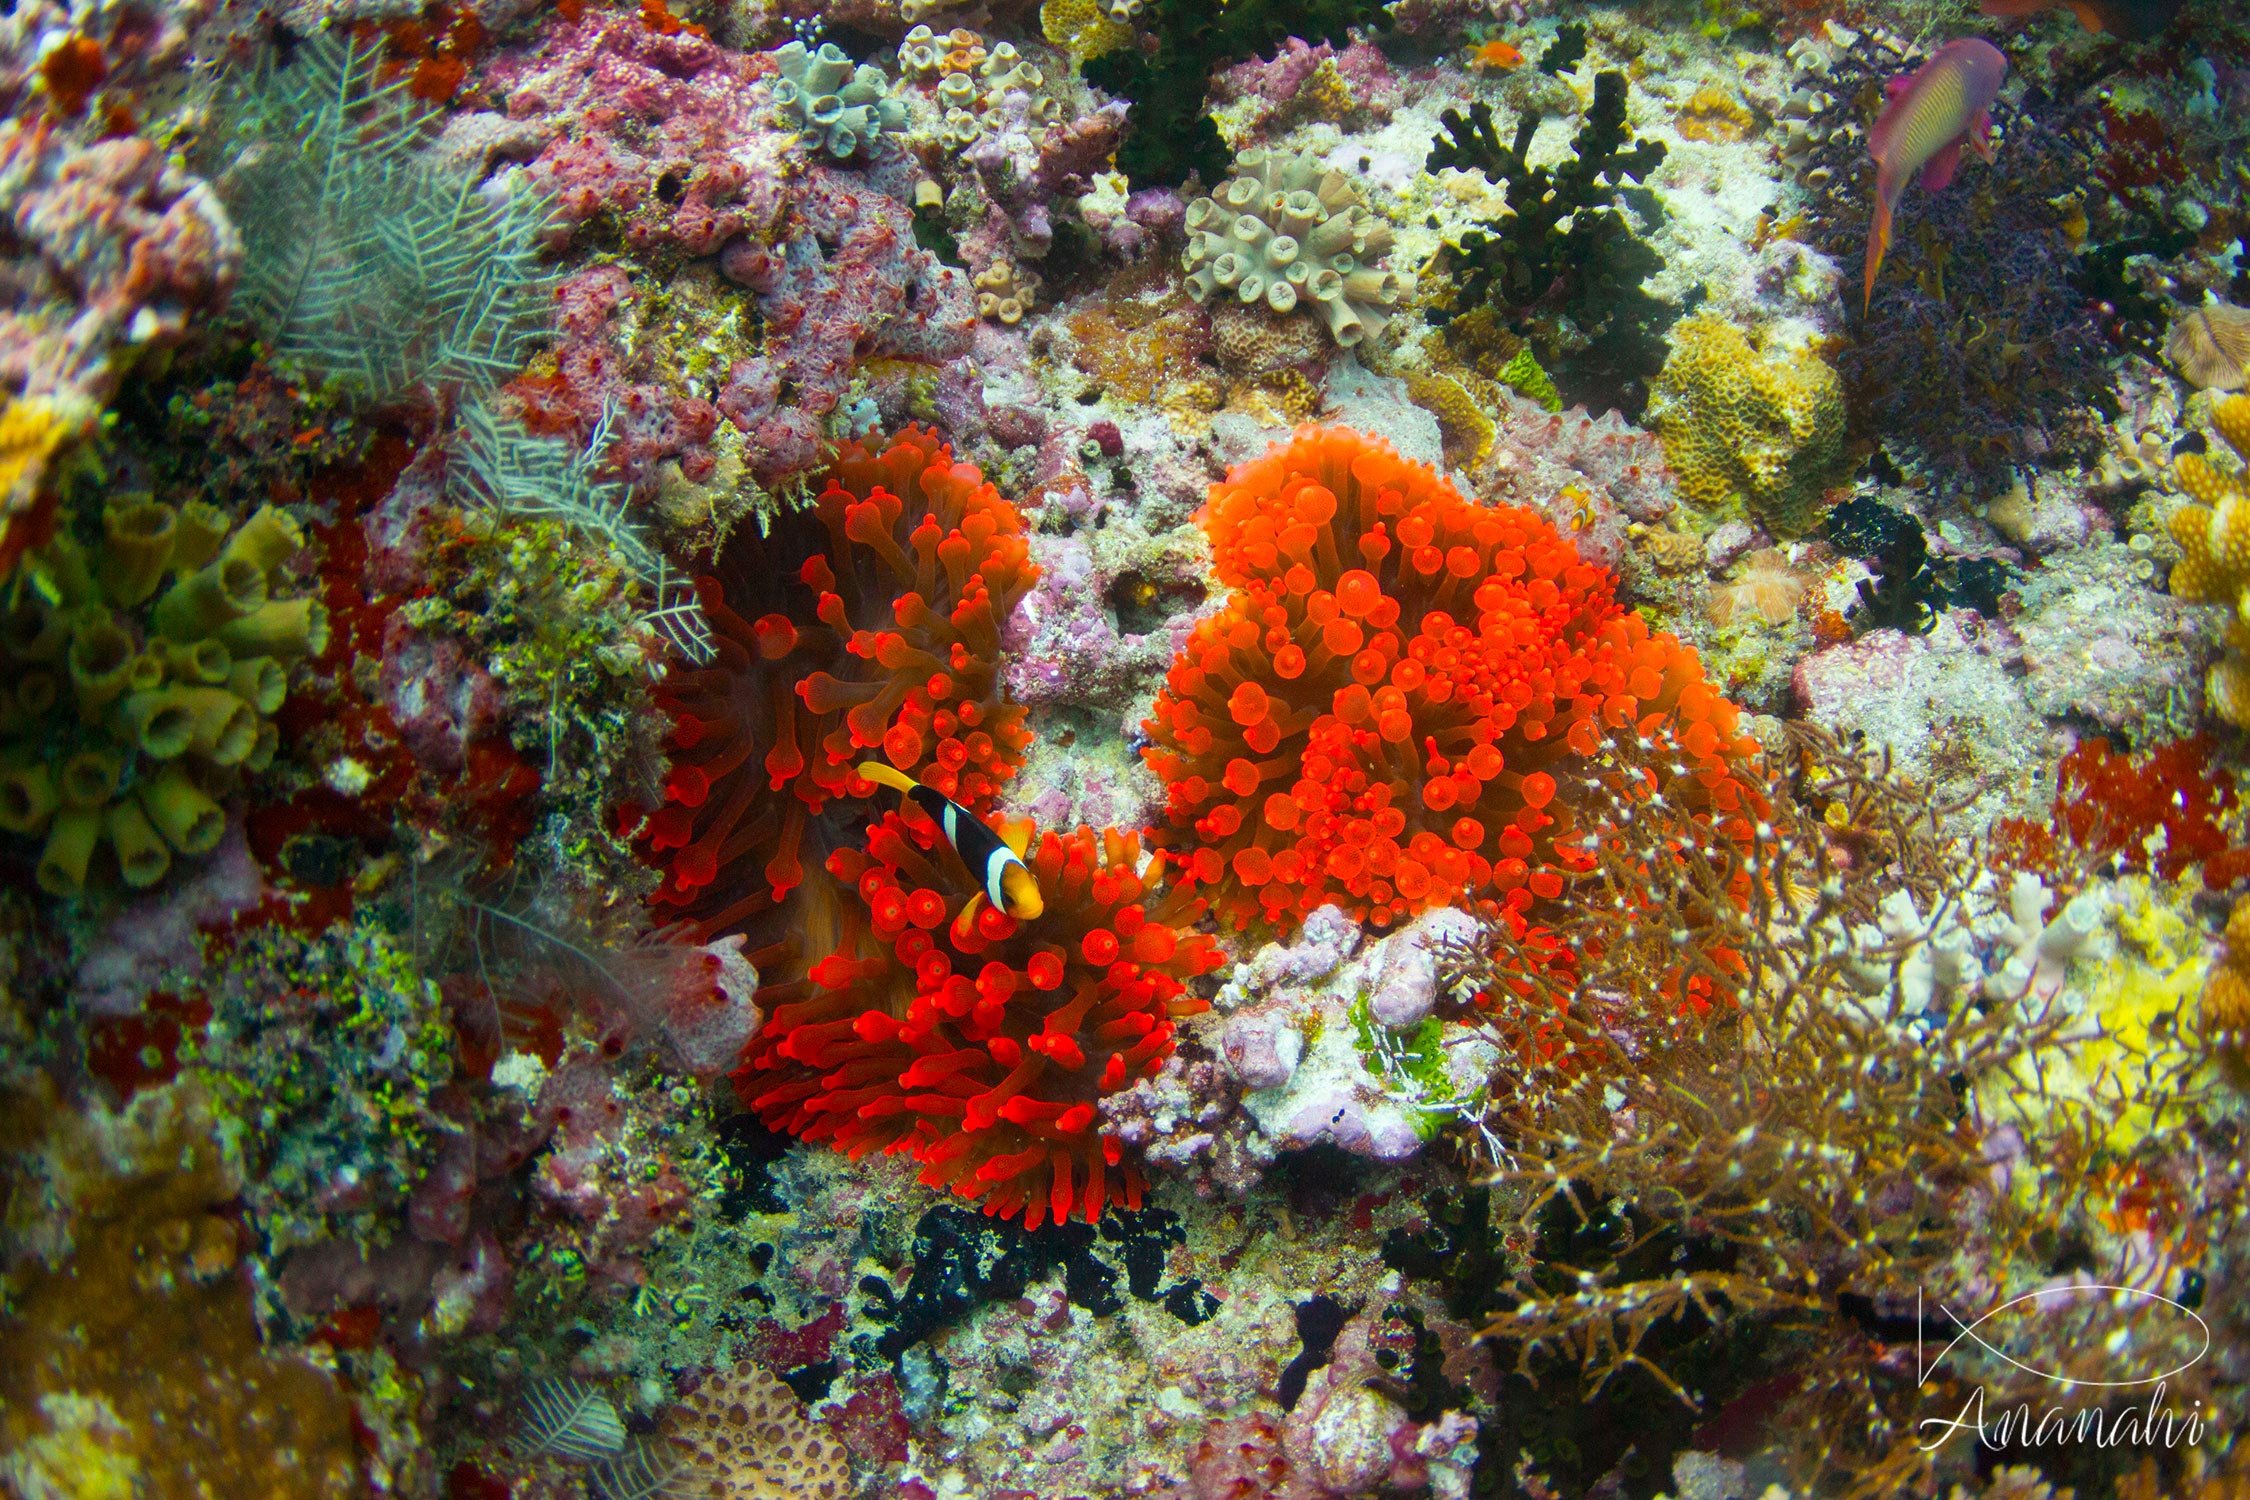 Bulb-tentacle sea anemone of Maldives